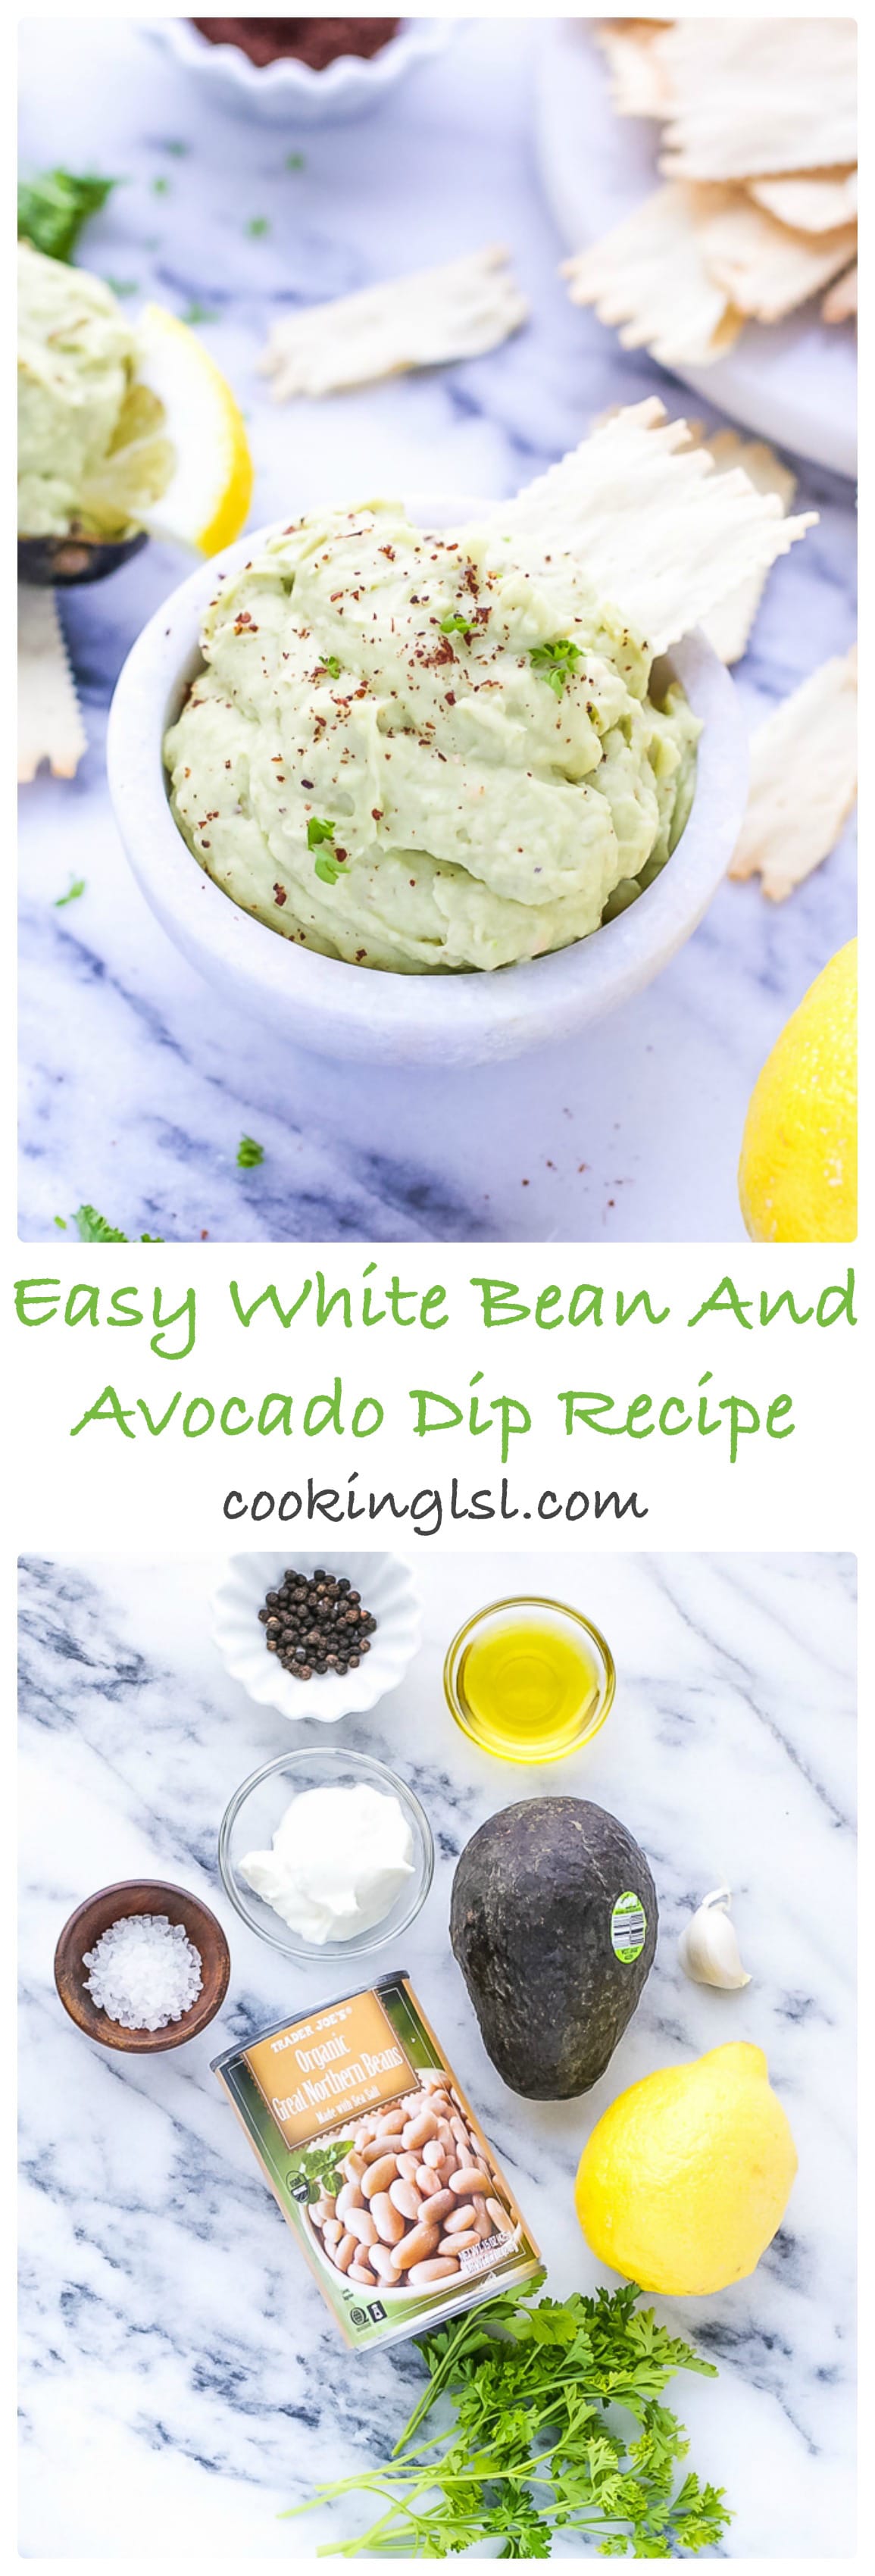 Easy-White-Bean-And-Avocado-Dip-Recipe